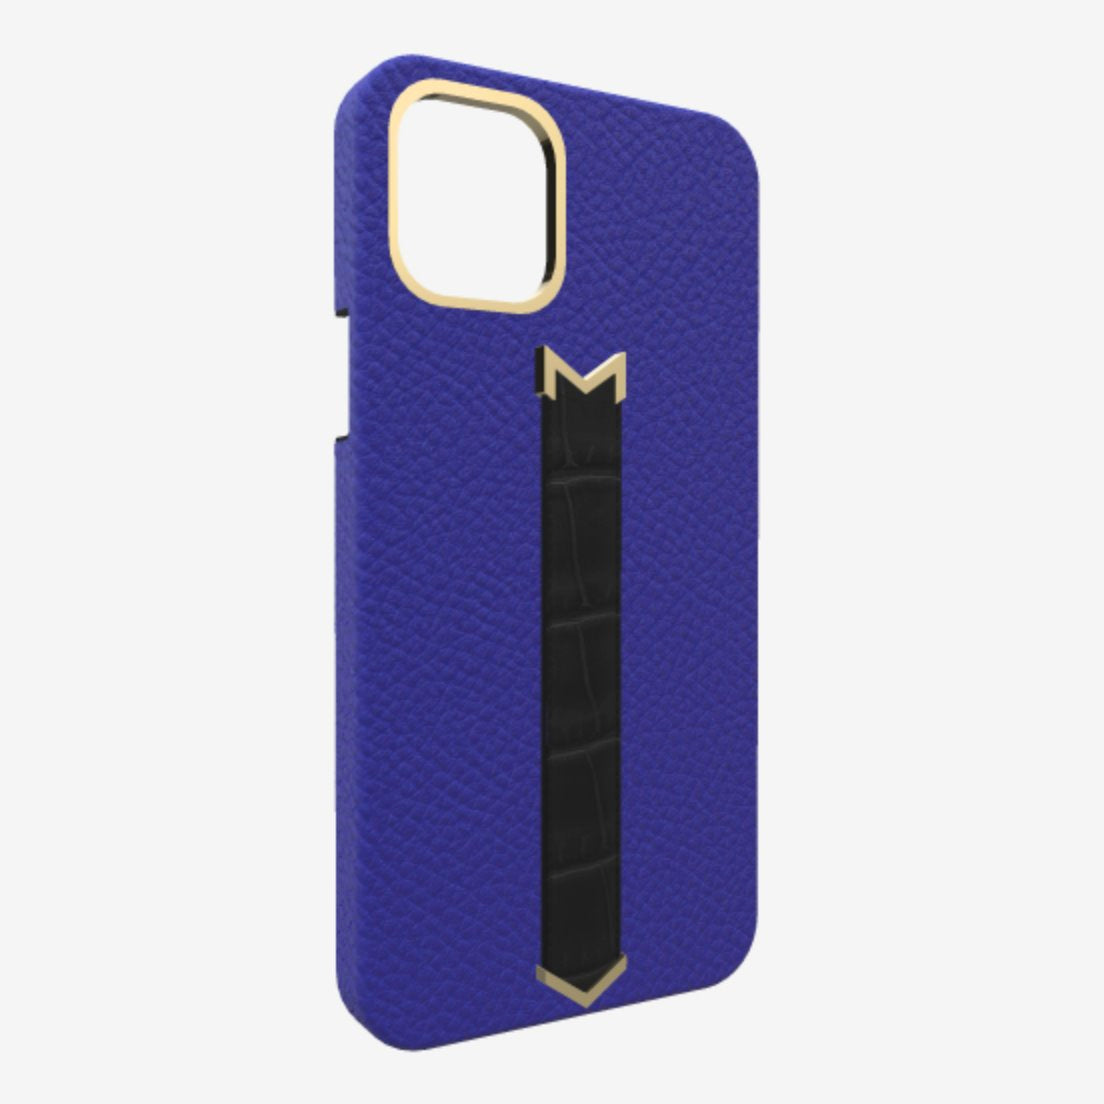 Gold Finger Strap Case for iPhone 13 Pro Max in Genuine Calfskin and Alligator Electric Blue Bond Black 